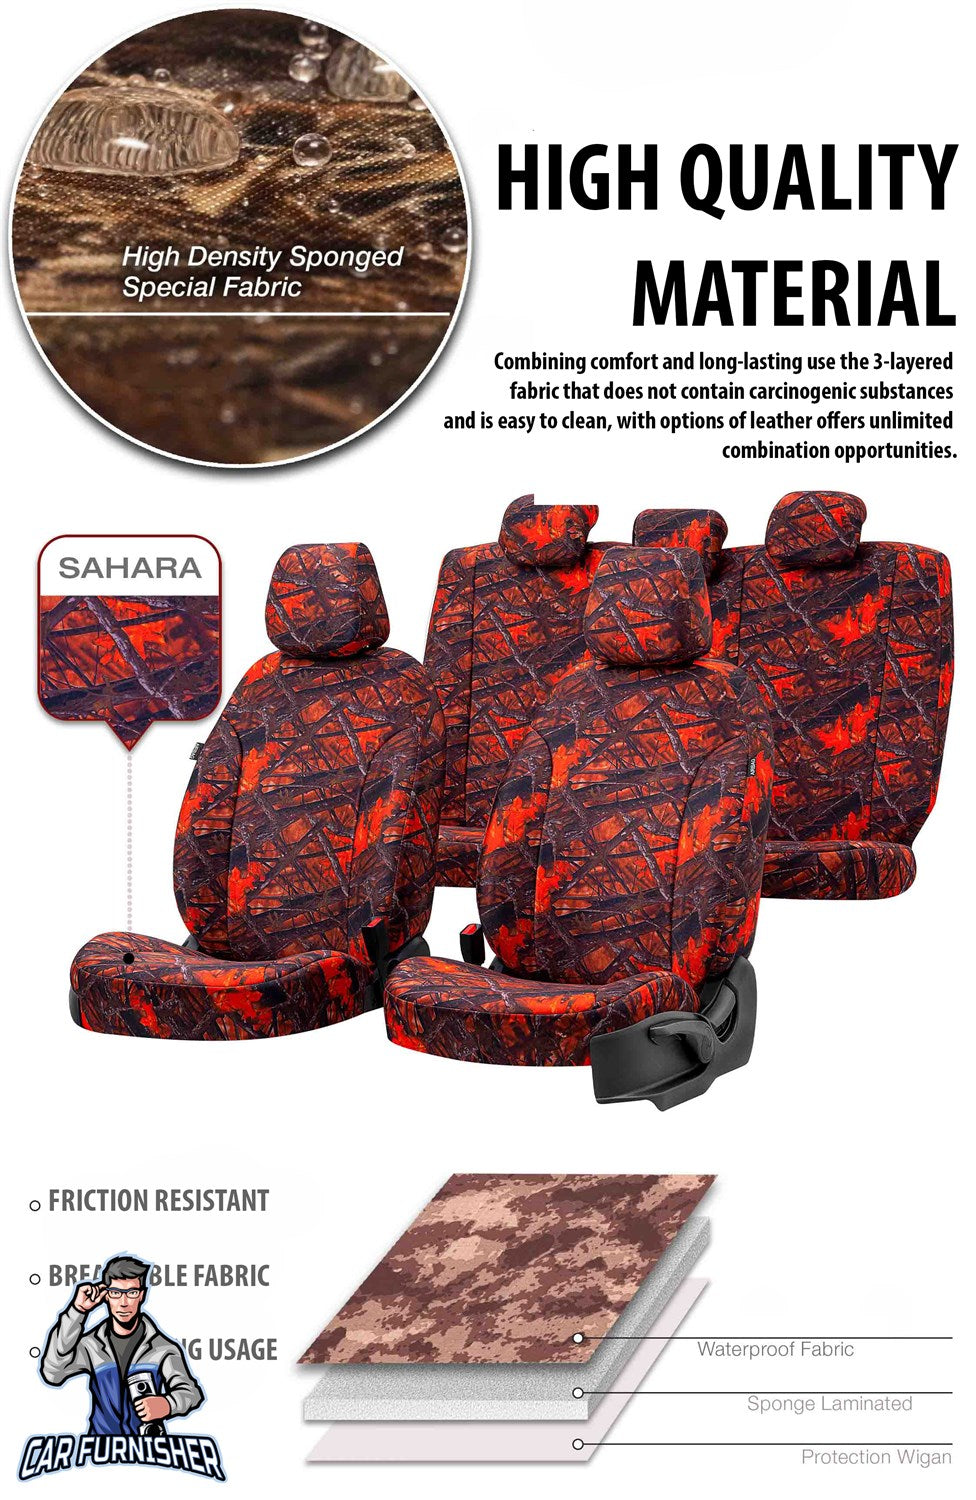 Isuzu L35 Seat Cover Camouflage Waterproof Design Montblanc Camo Waterproof Fabric